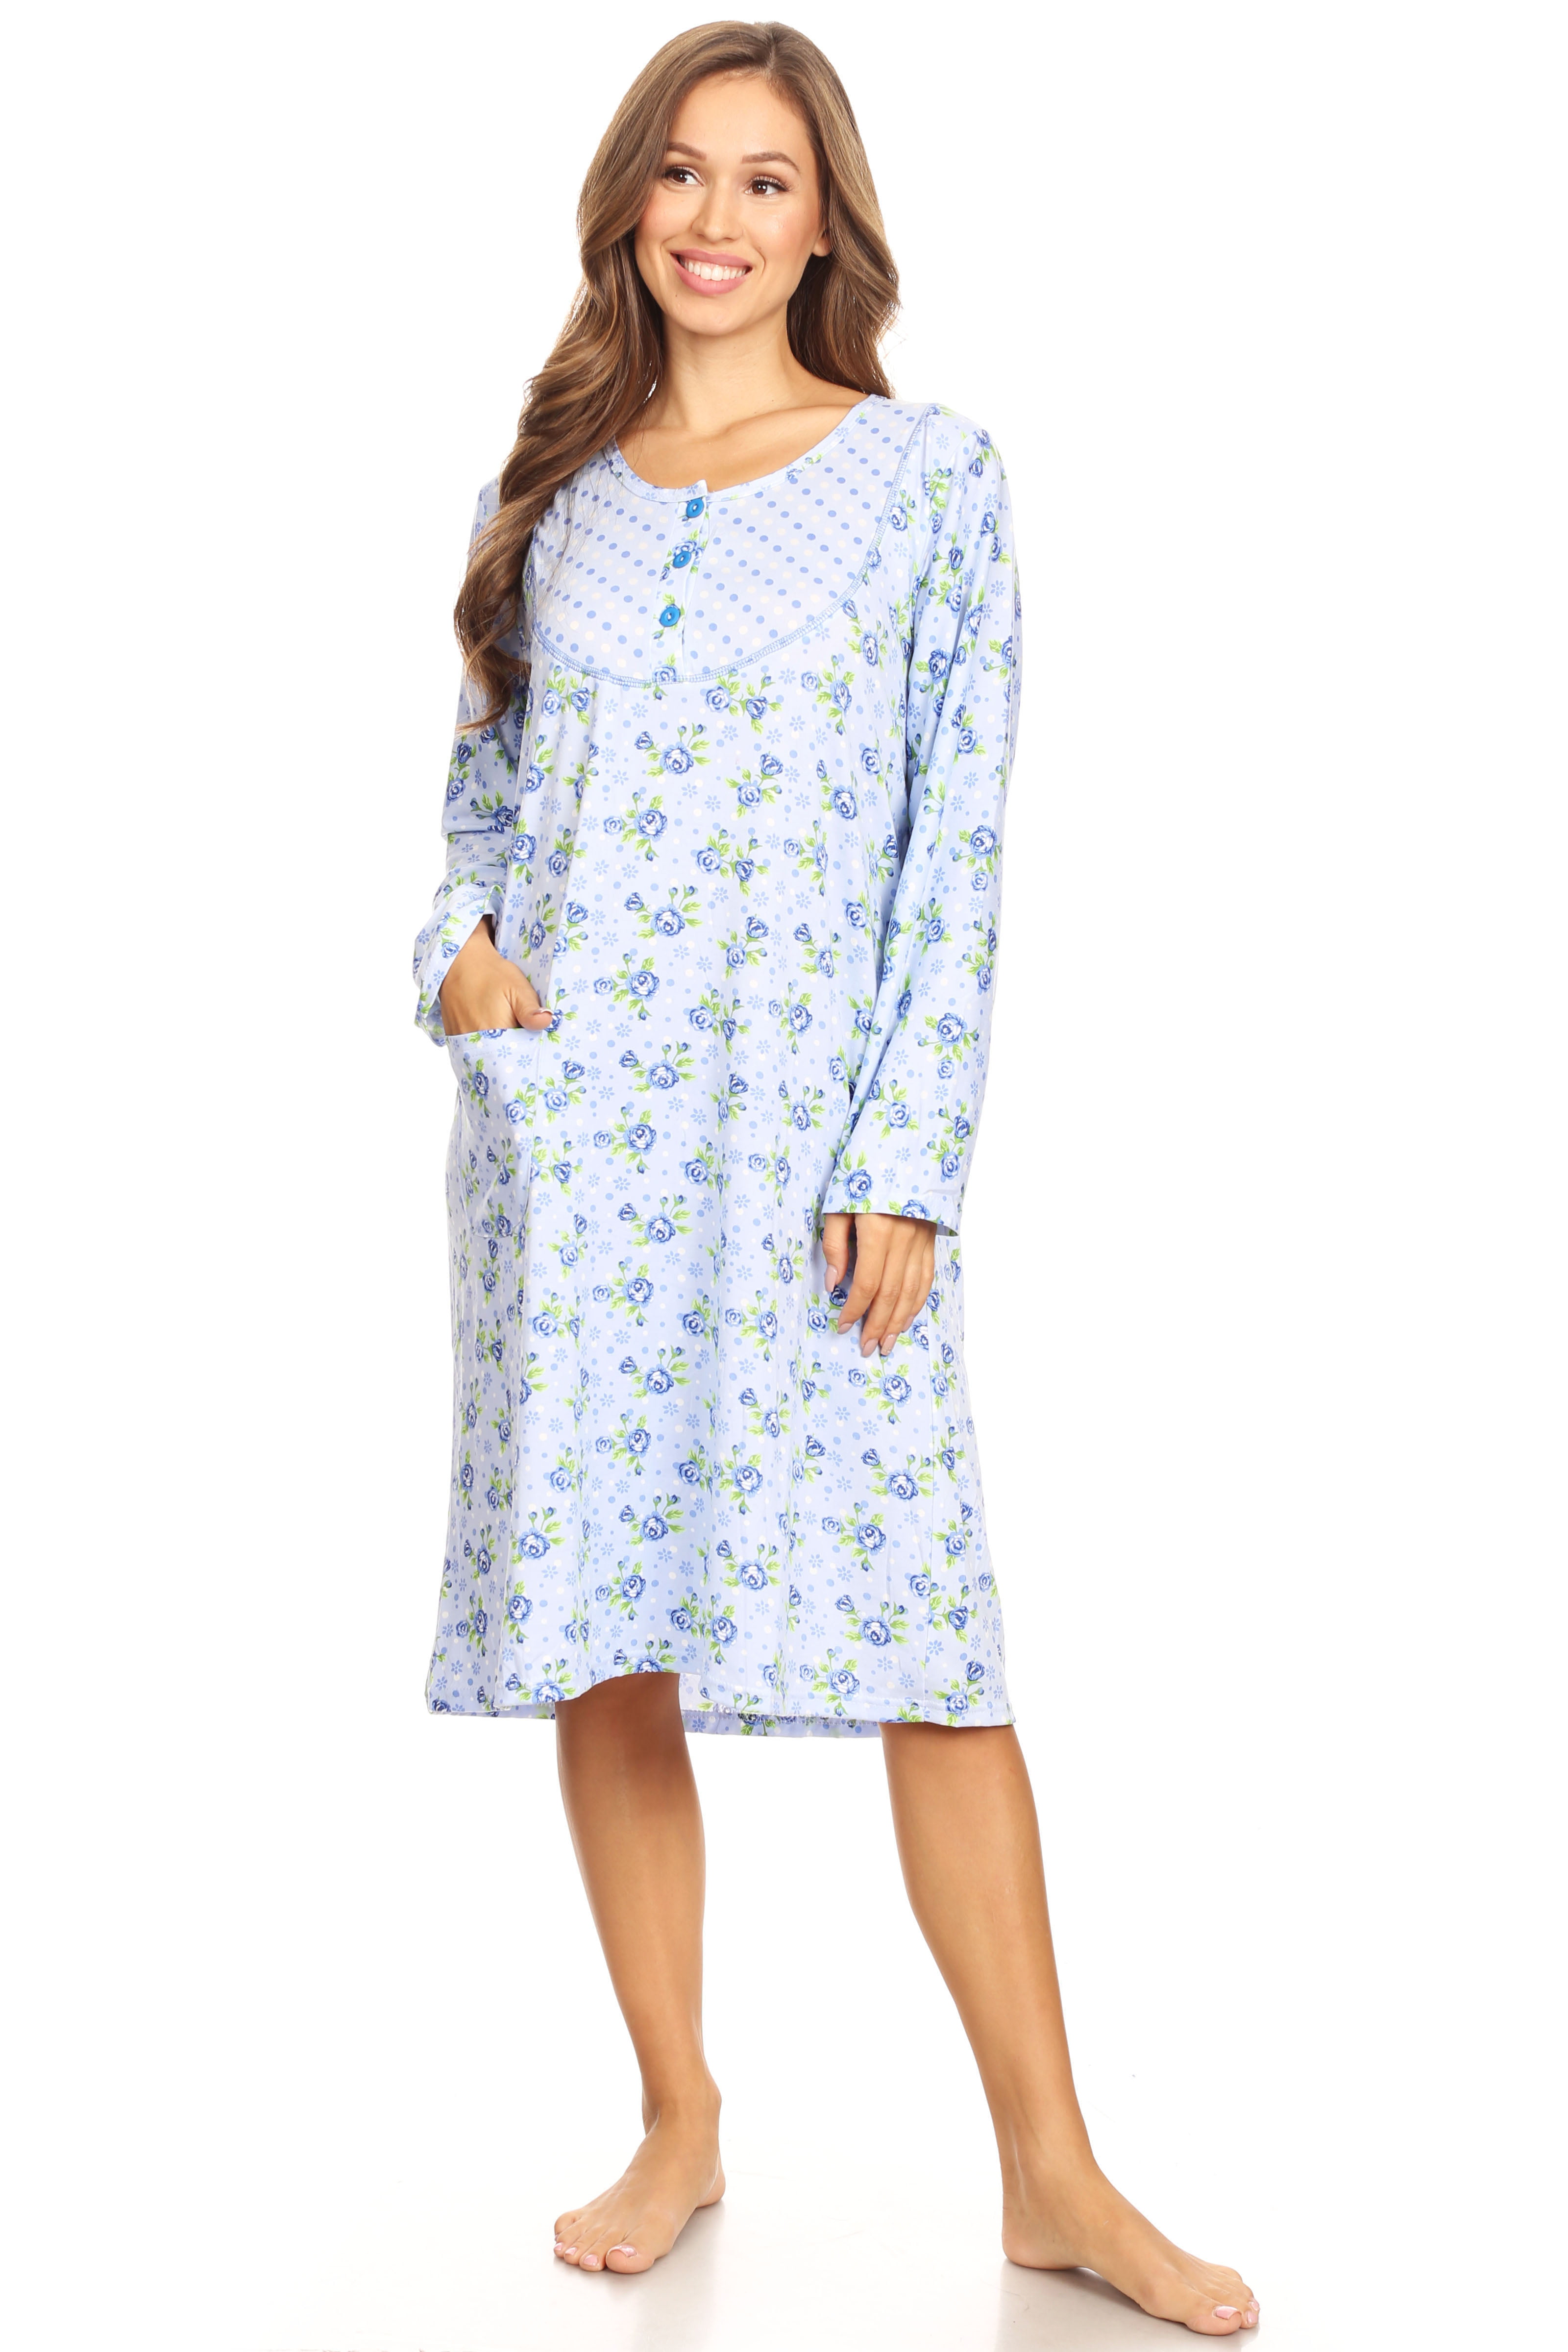 6013 Women Nightgown Sleepwear Pajamas Woman Long Sleeve Sleep Dress Nightshirt 